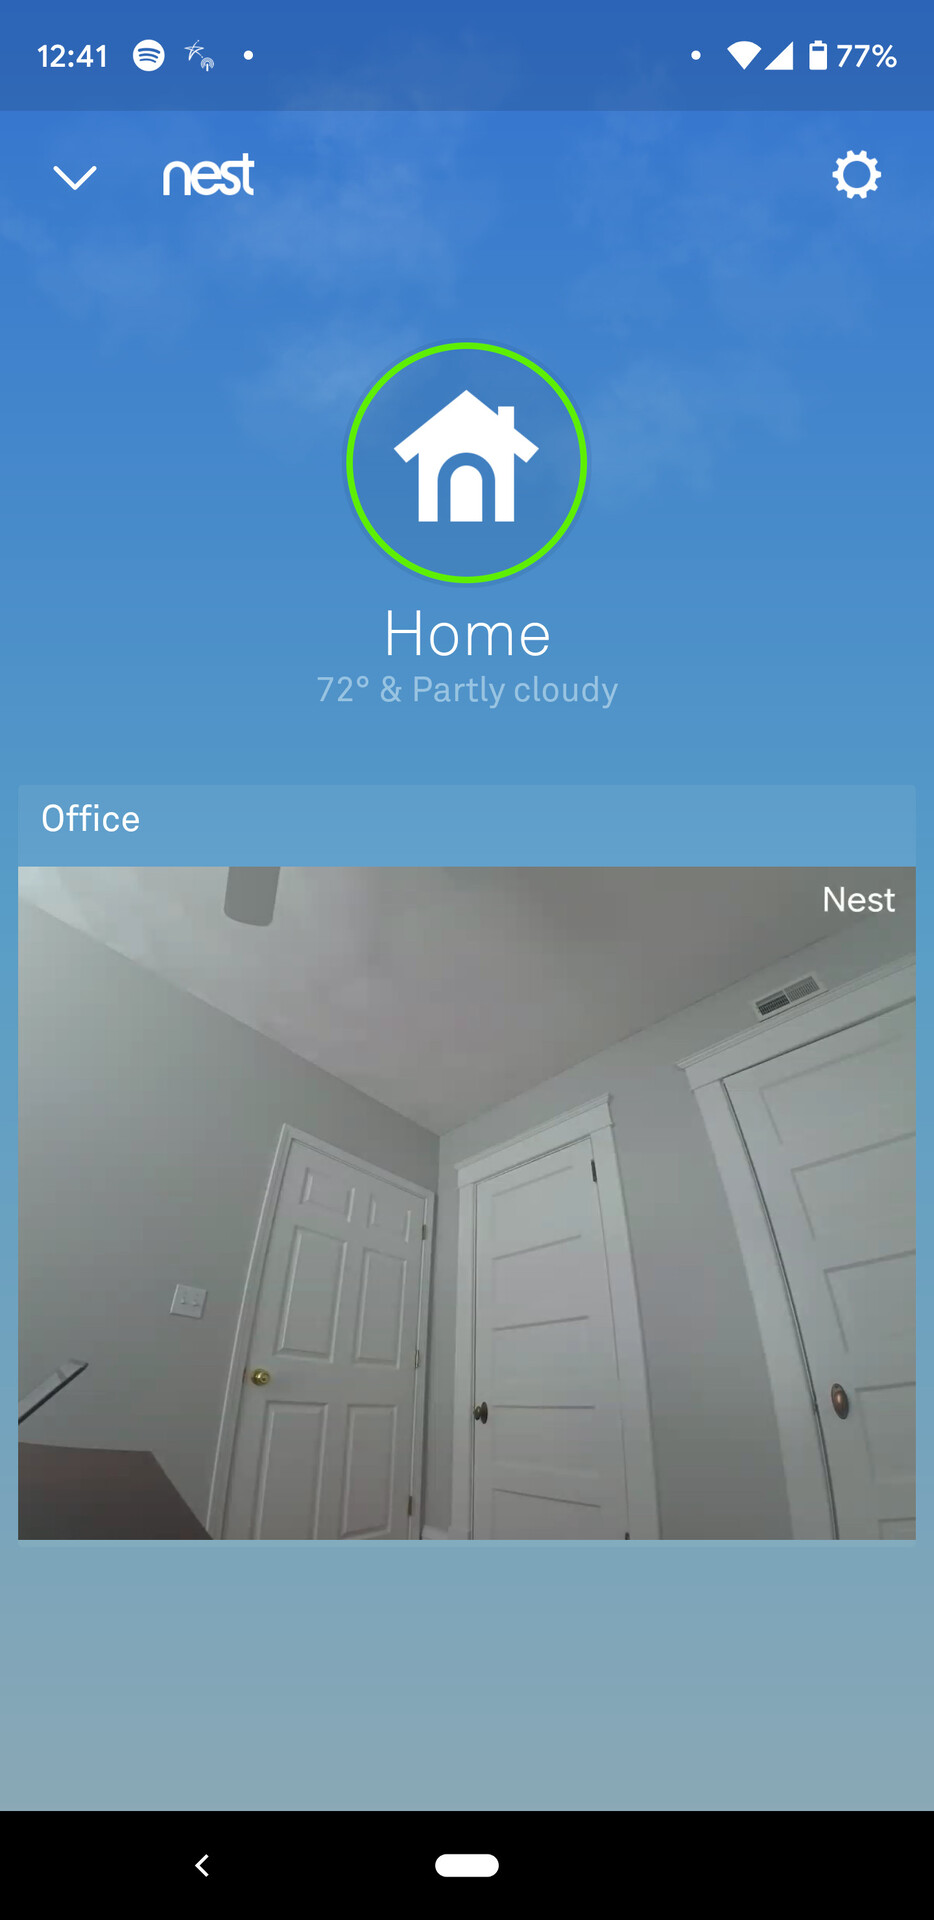 nest app interface